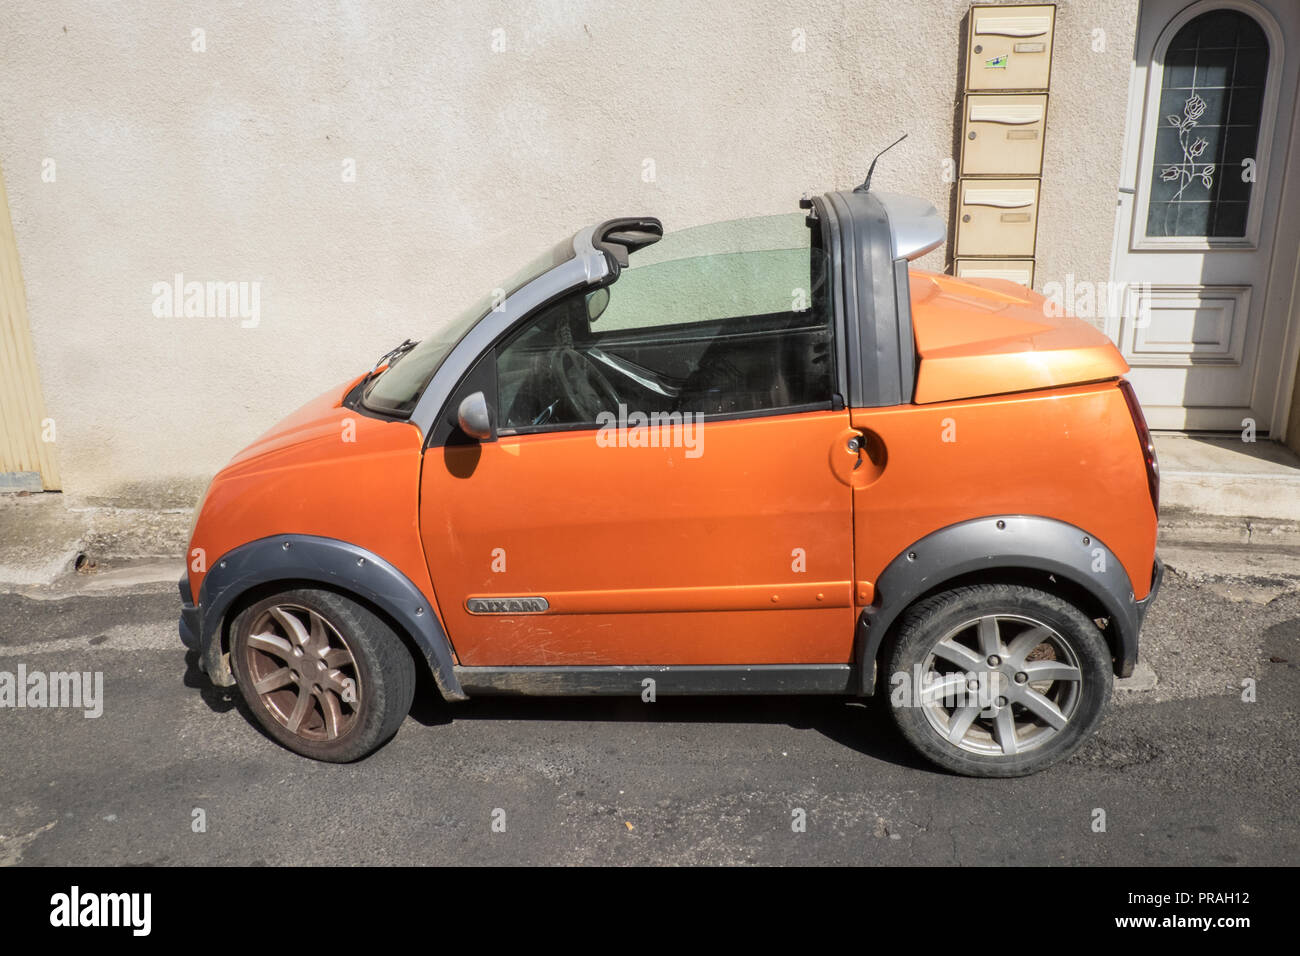 Orange,tiny,Aixam,French,compact,car,parked,on,street,Esperaza,Aude,region,South of France,France,Europe,European,model, Stock Photo